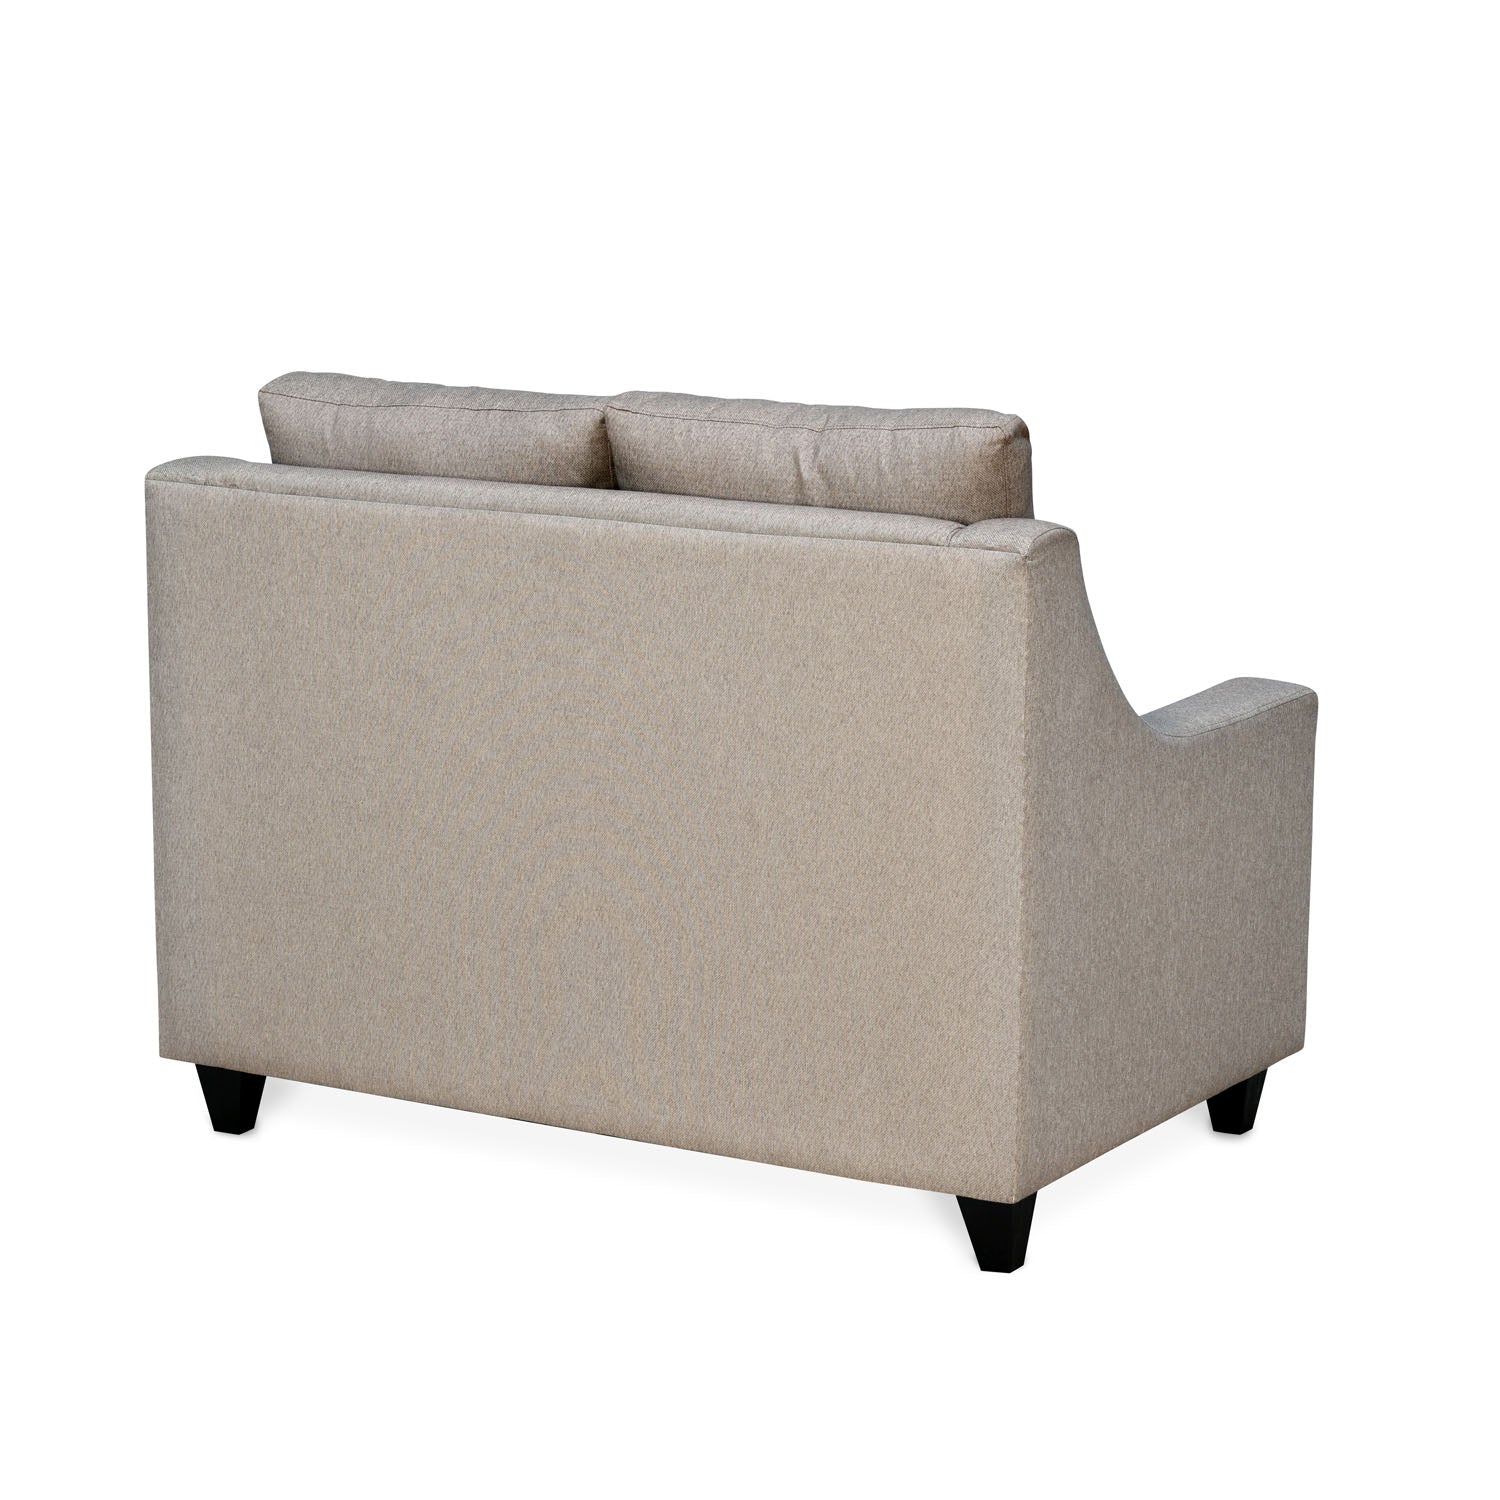 Brutus 2 Seater Fabric Sofa (Light Brown)